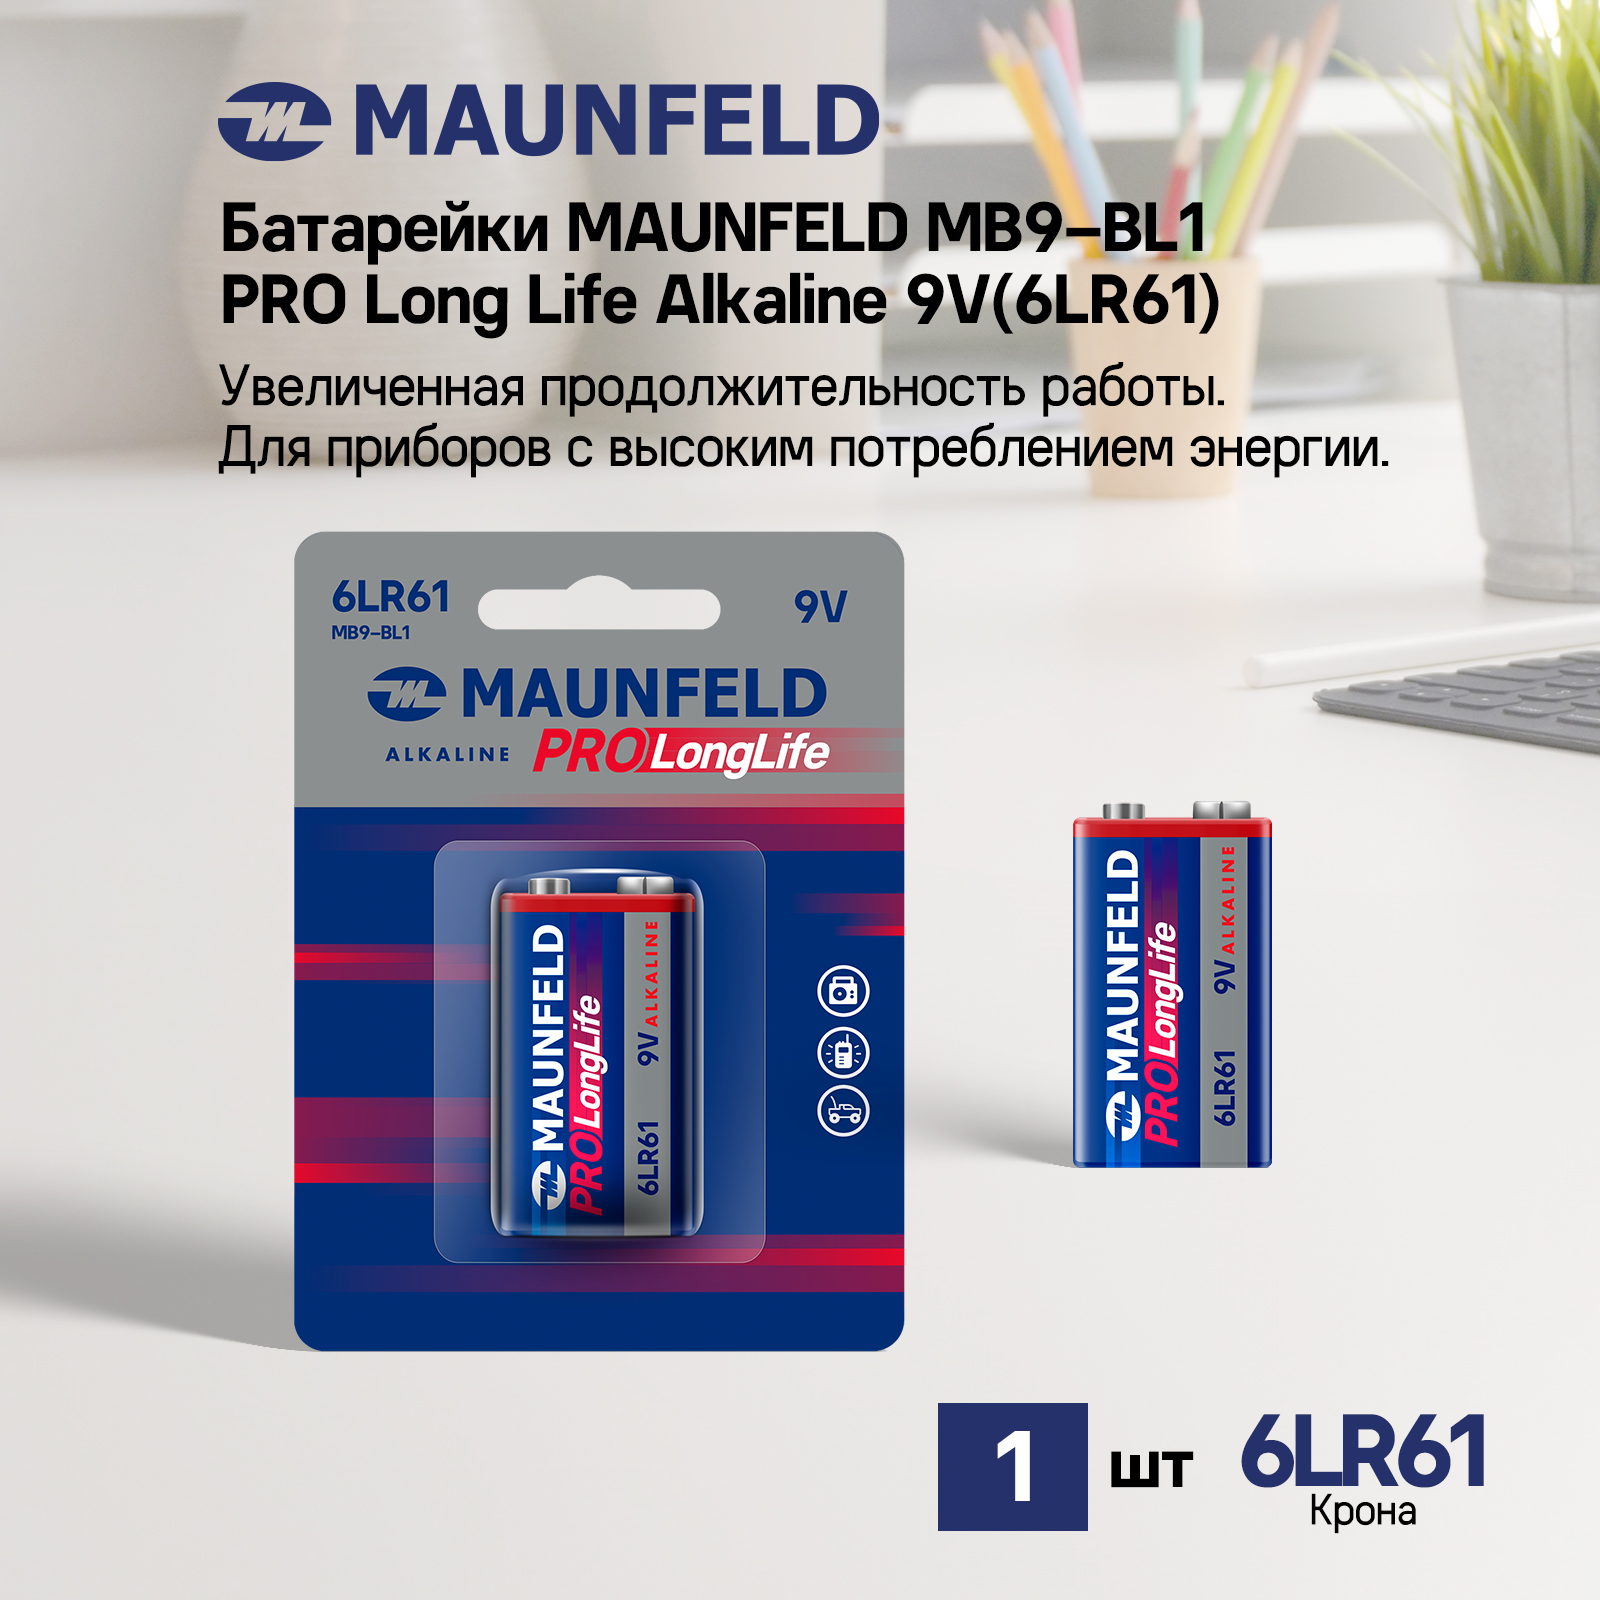 Батарейки MAUNFELD PRO Long Life Alkaline 9V(6LR61) MB9-BL1, блистер 1 шт.